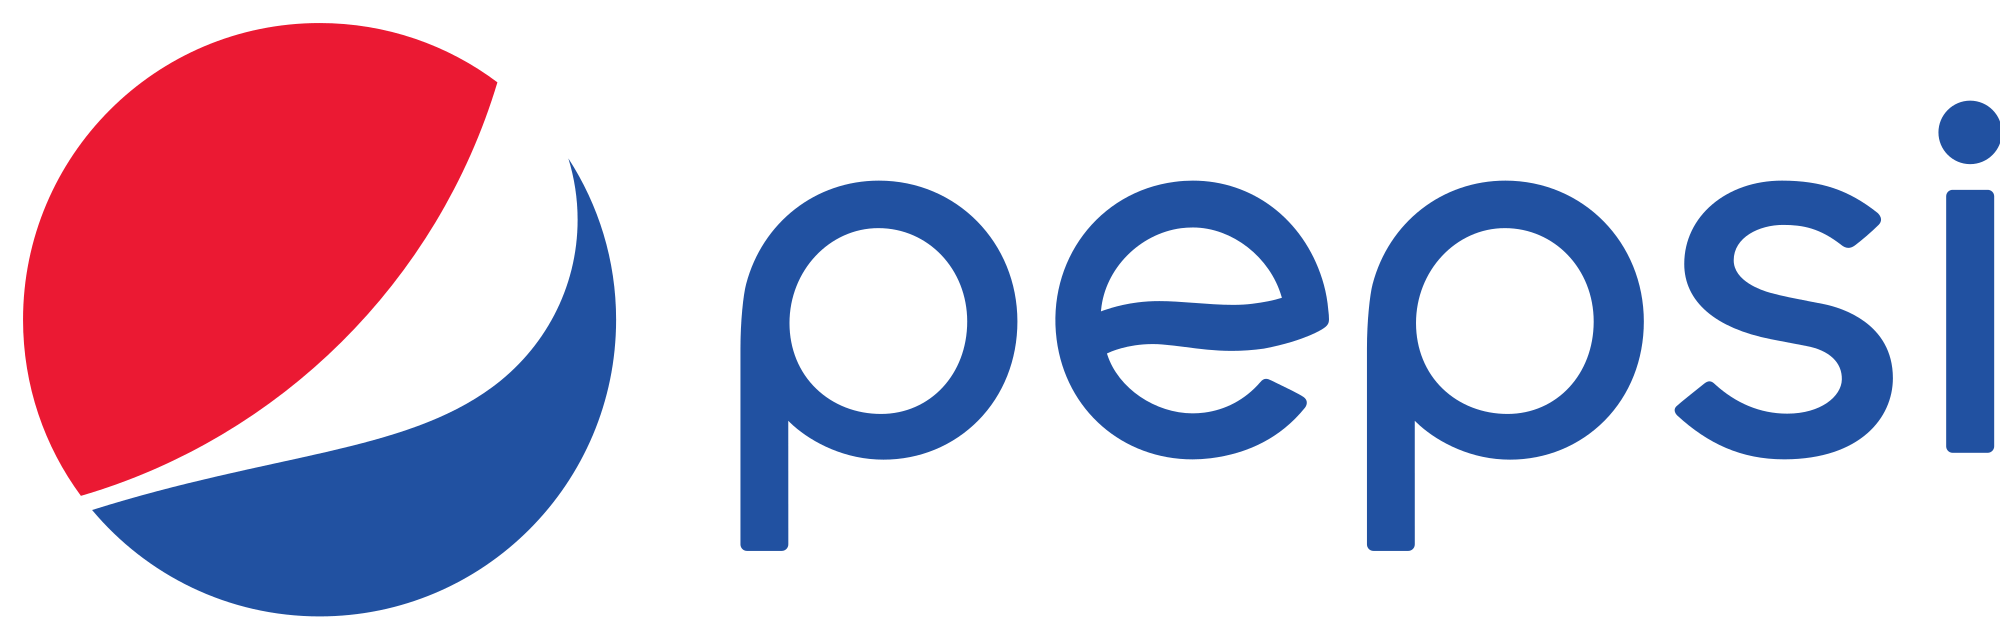 Pepsi Logo - File:Pepsi logo new.svg - Wikimedia Commons